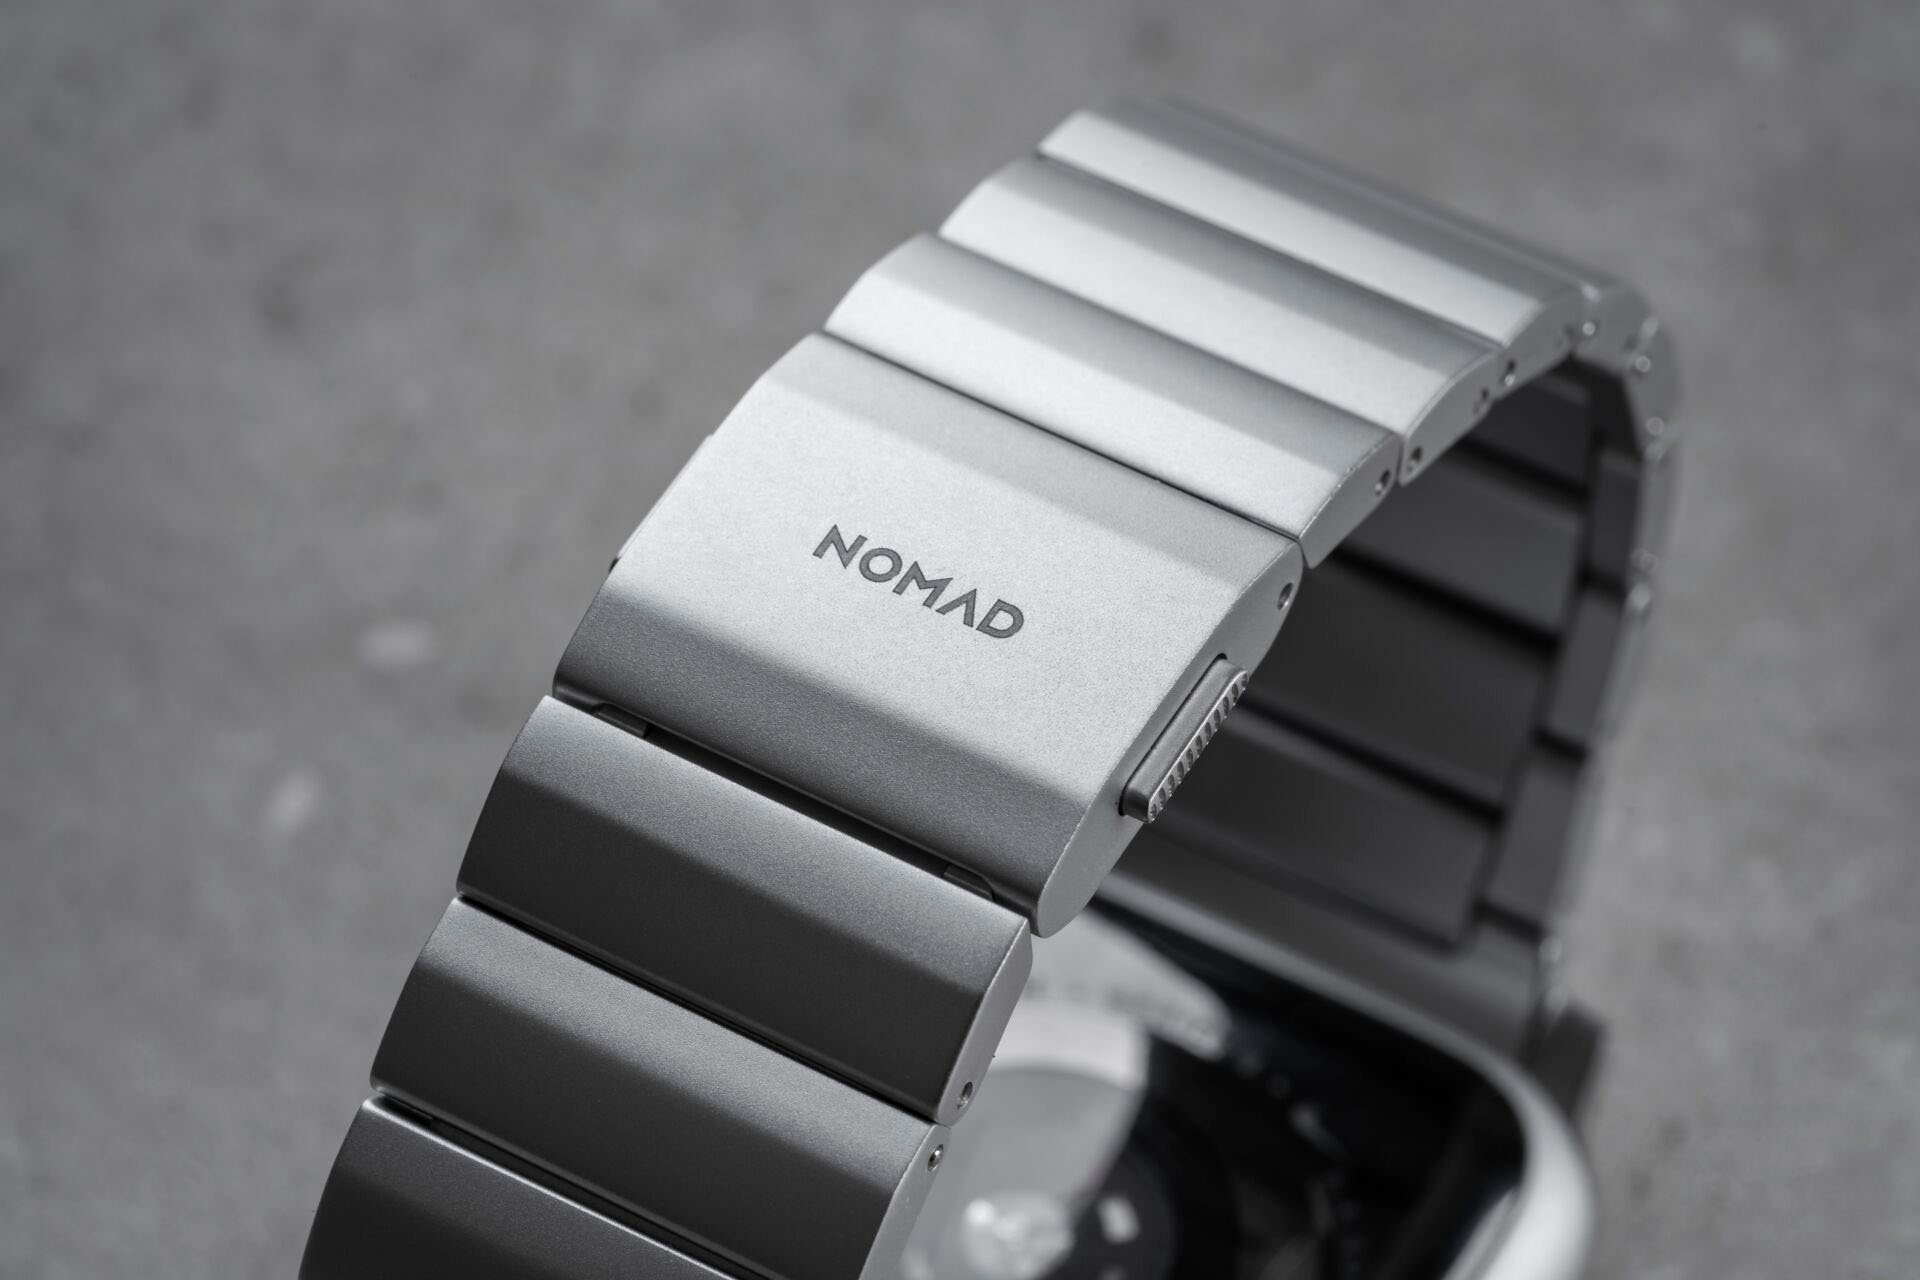 Aluminum Nomad Strap 42/44/45/49mm Smartwatch-Armband